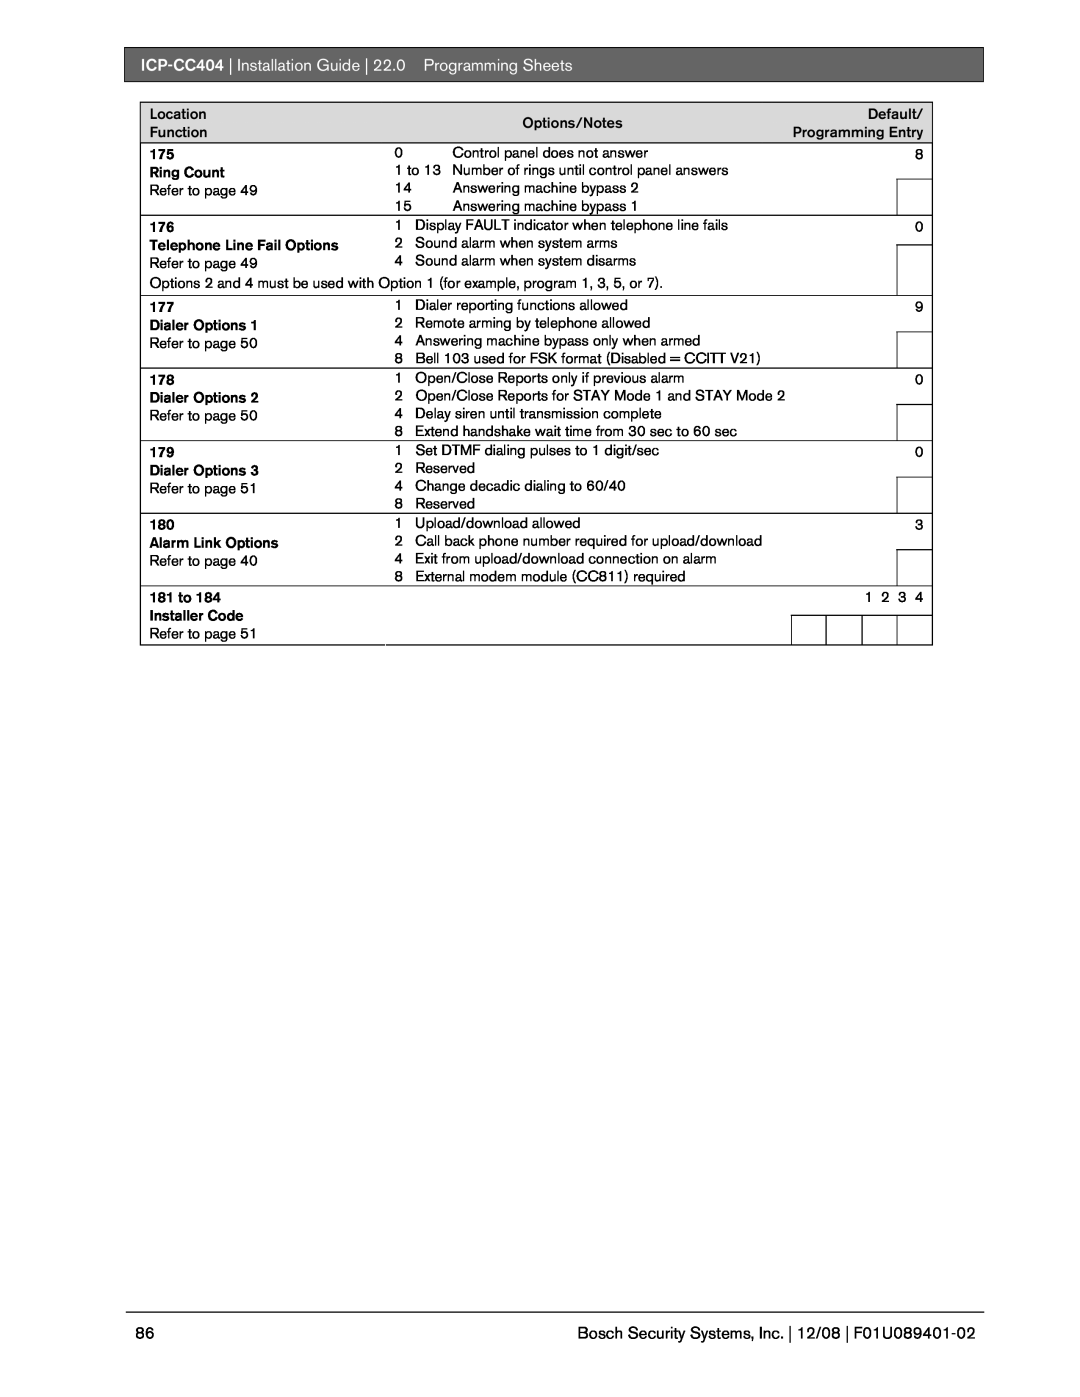 Bosch Appliances manual 22.0, Programming Sheets, ICP-CC404| Installation Guide 